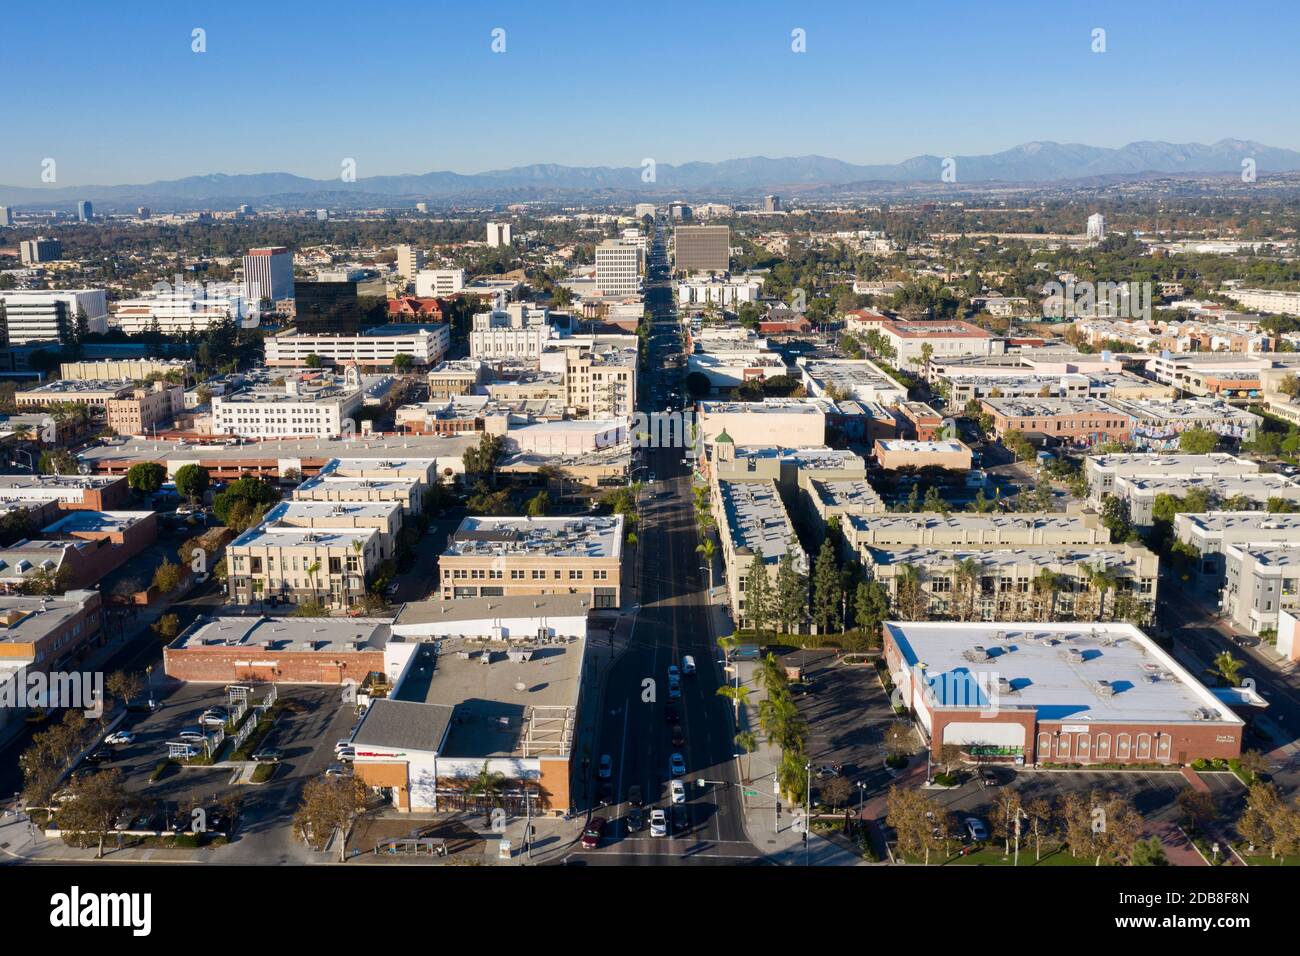 Aerial view looking north along Main Street in downtown Santa Ana, California Stock Photo